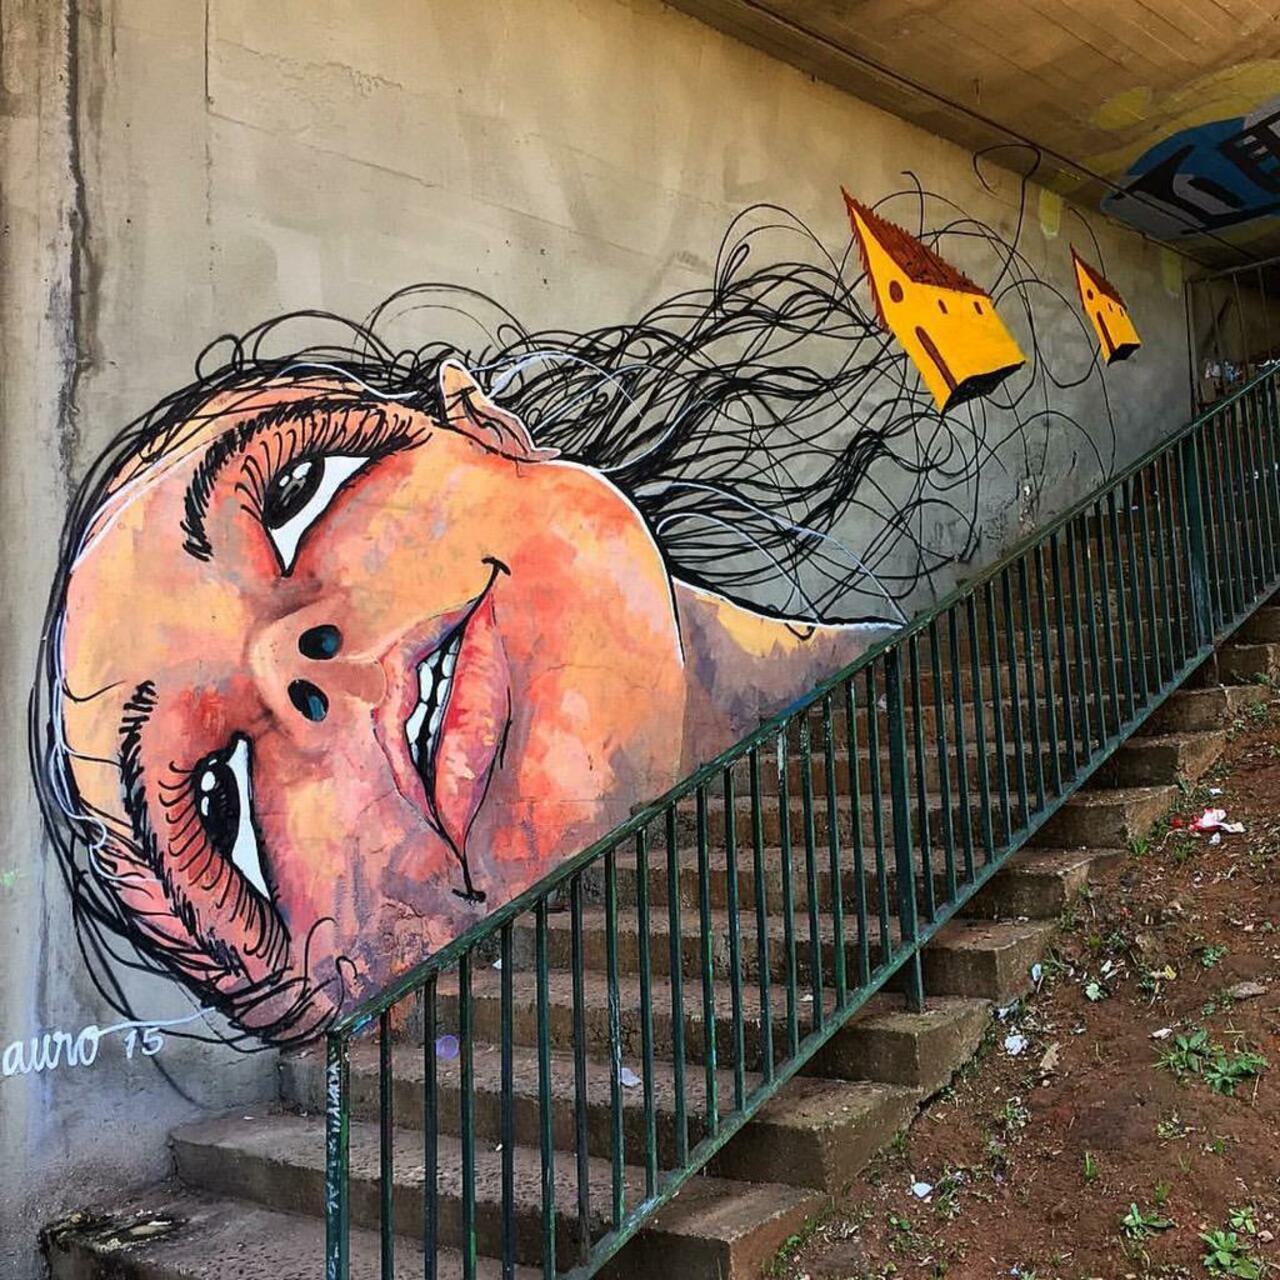 Street Art by Reveracidade in São Paulo 

#art #graffiti #mural #streetart http://t.co/qu2K8rHi7P yo